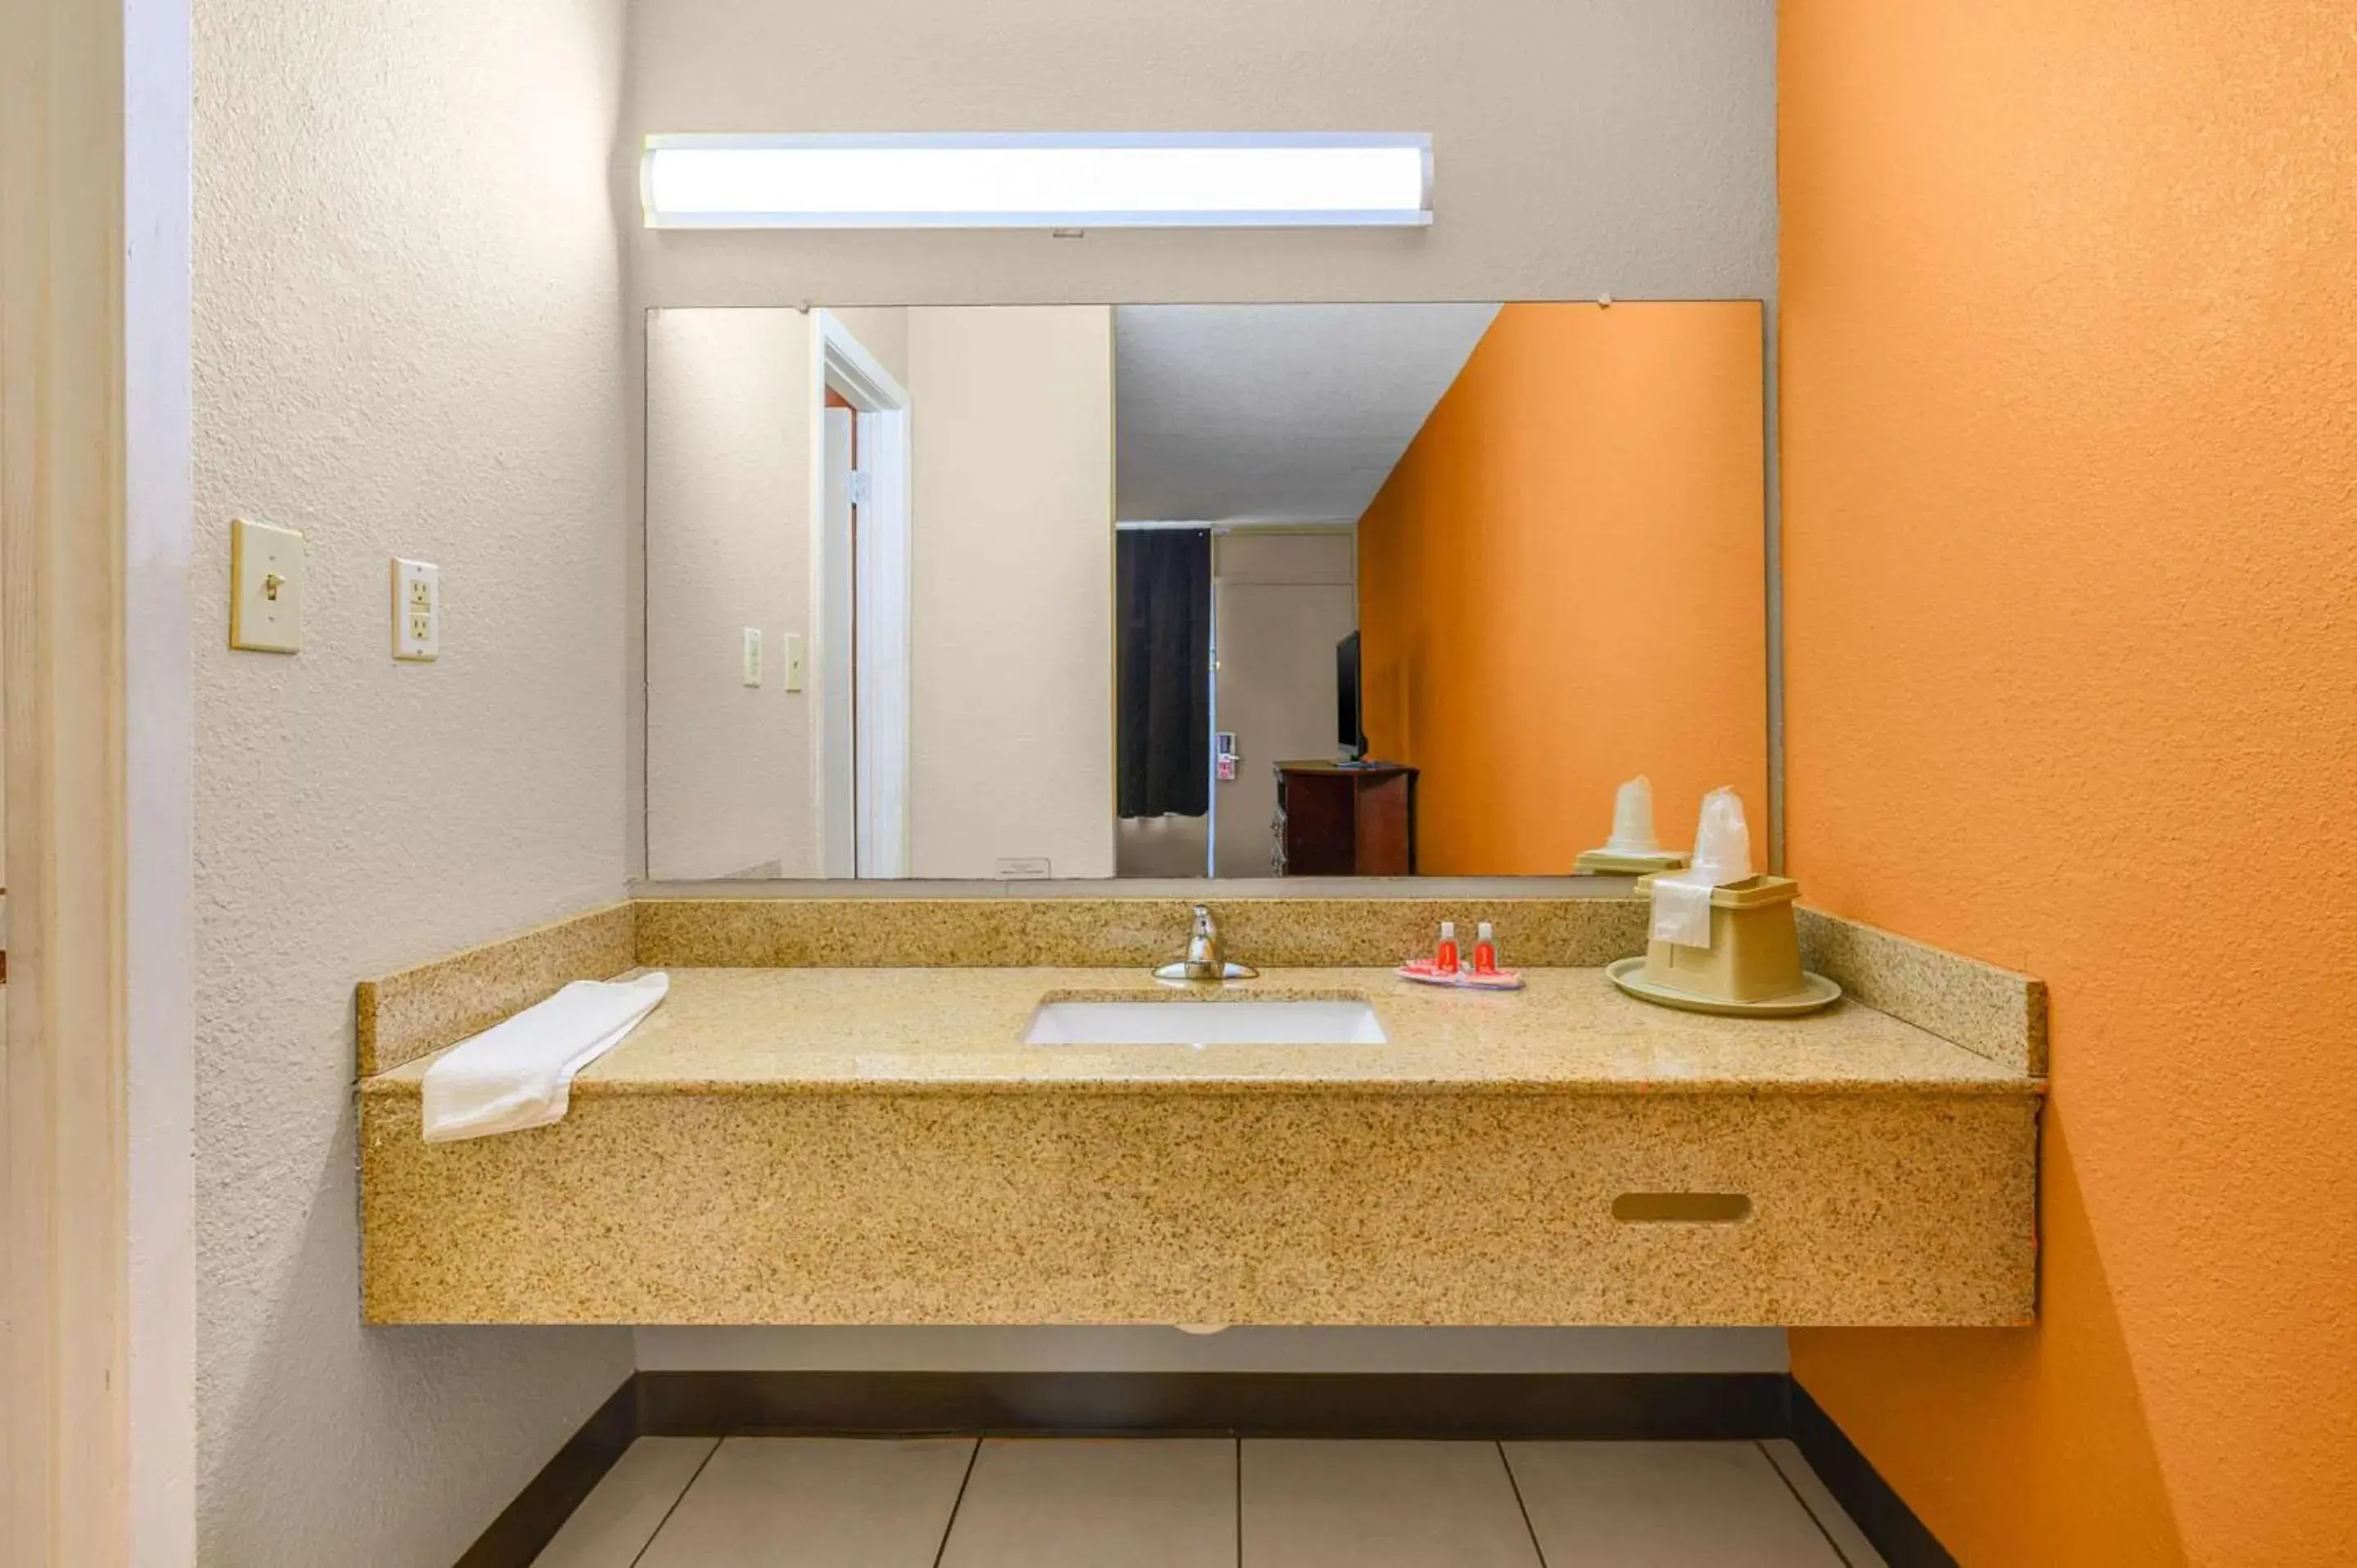 Photo of the whole room, Bathroom in Econo Lodge